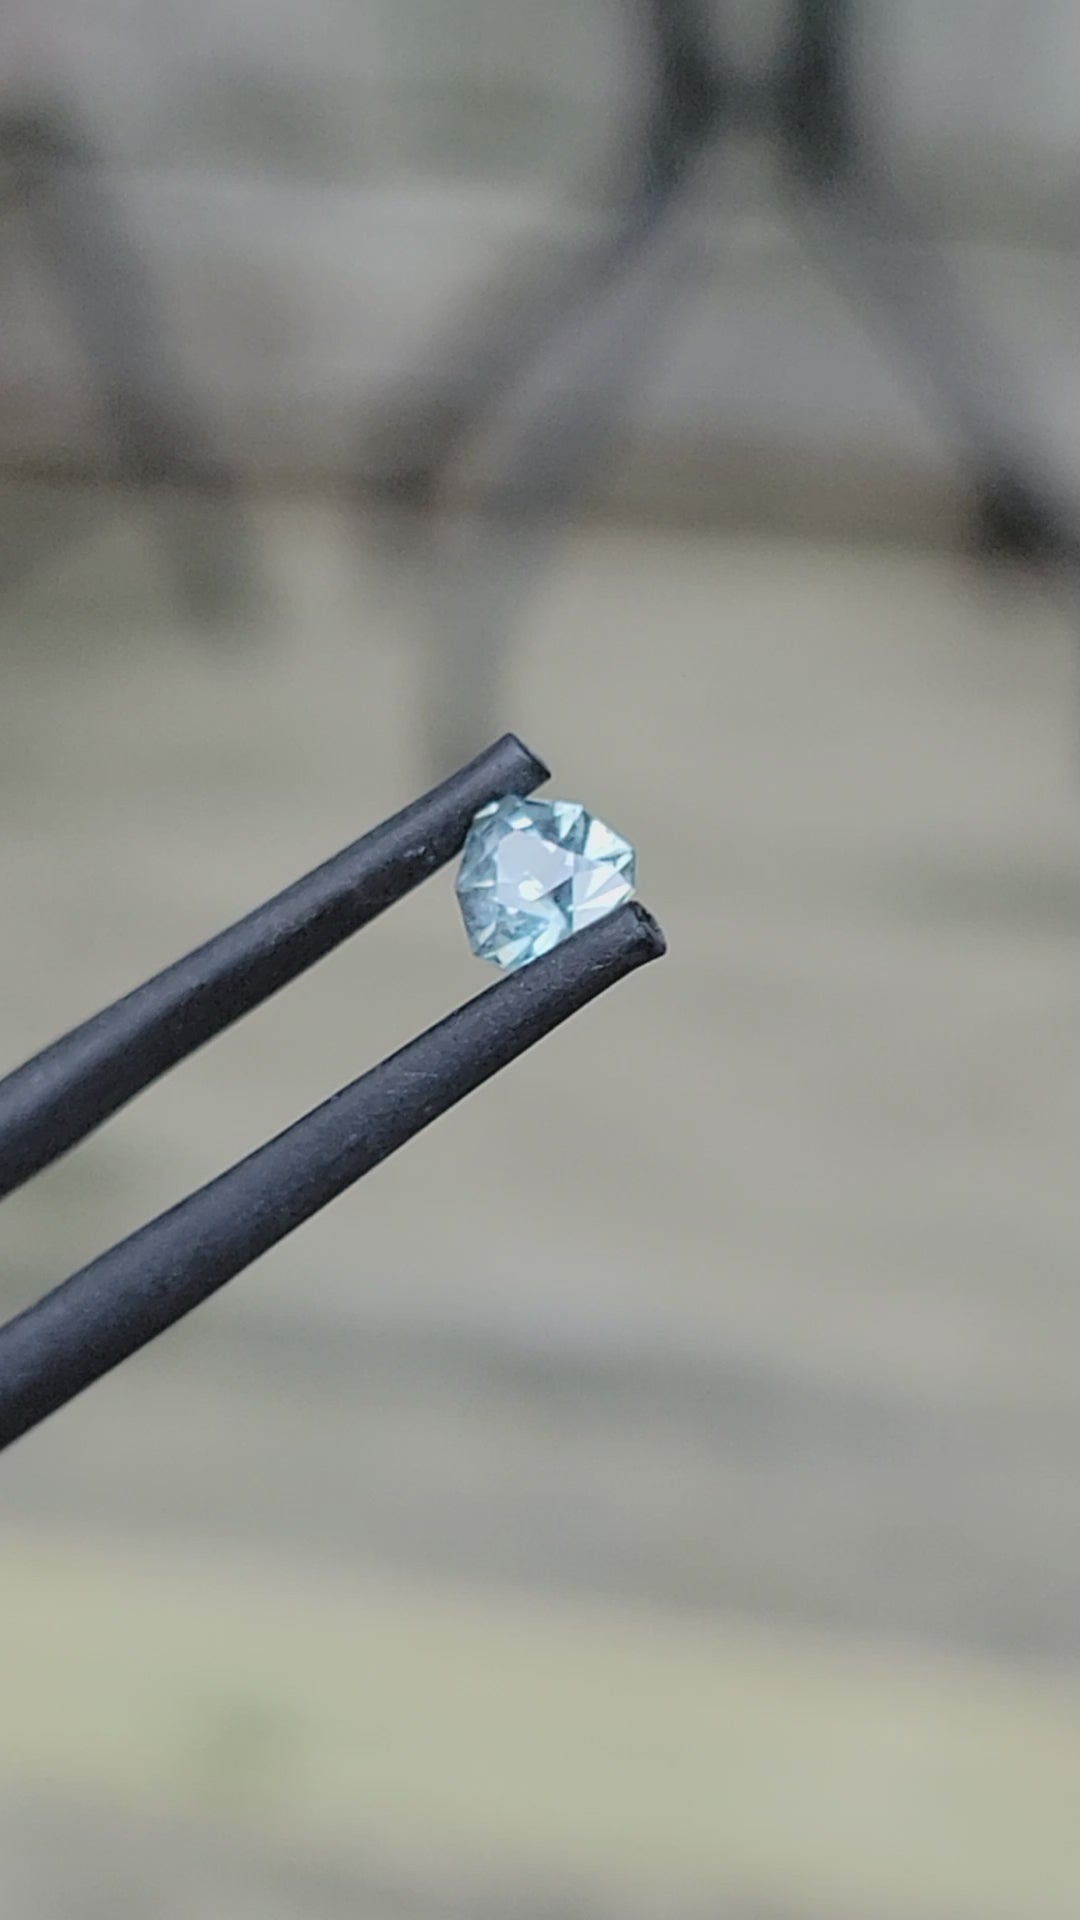 Montana Sapphire 5.5mm, 0.75 Carats - Precision Cut Trillion Sapphire - Untreated El Dorado bar Montana Sapphire